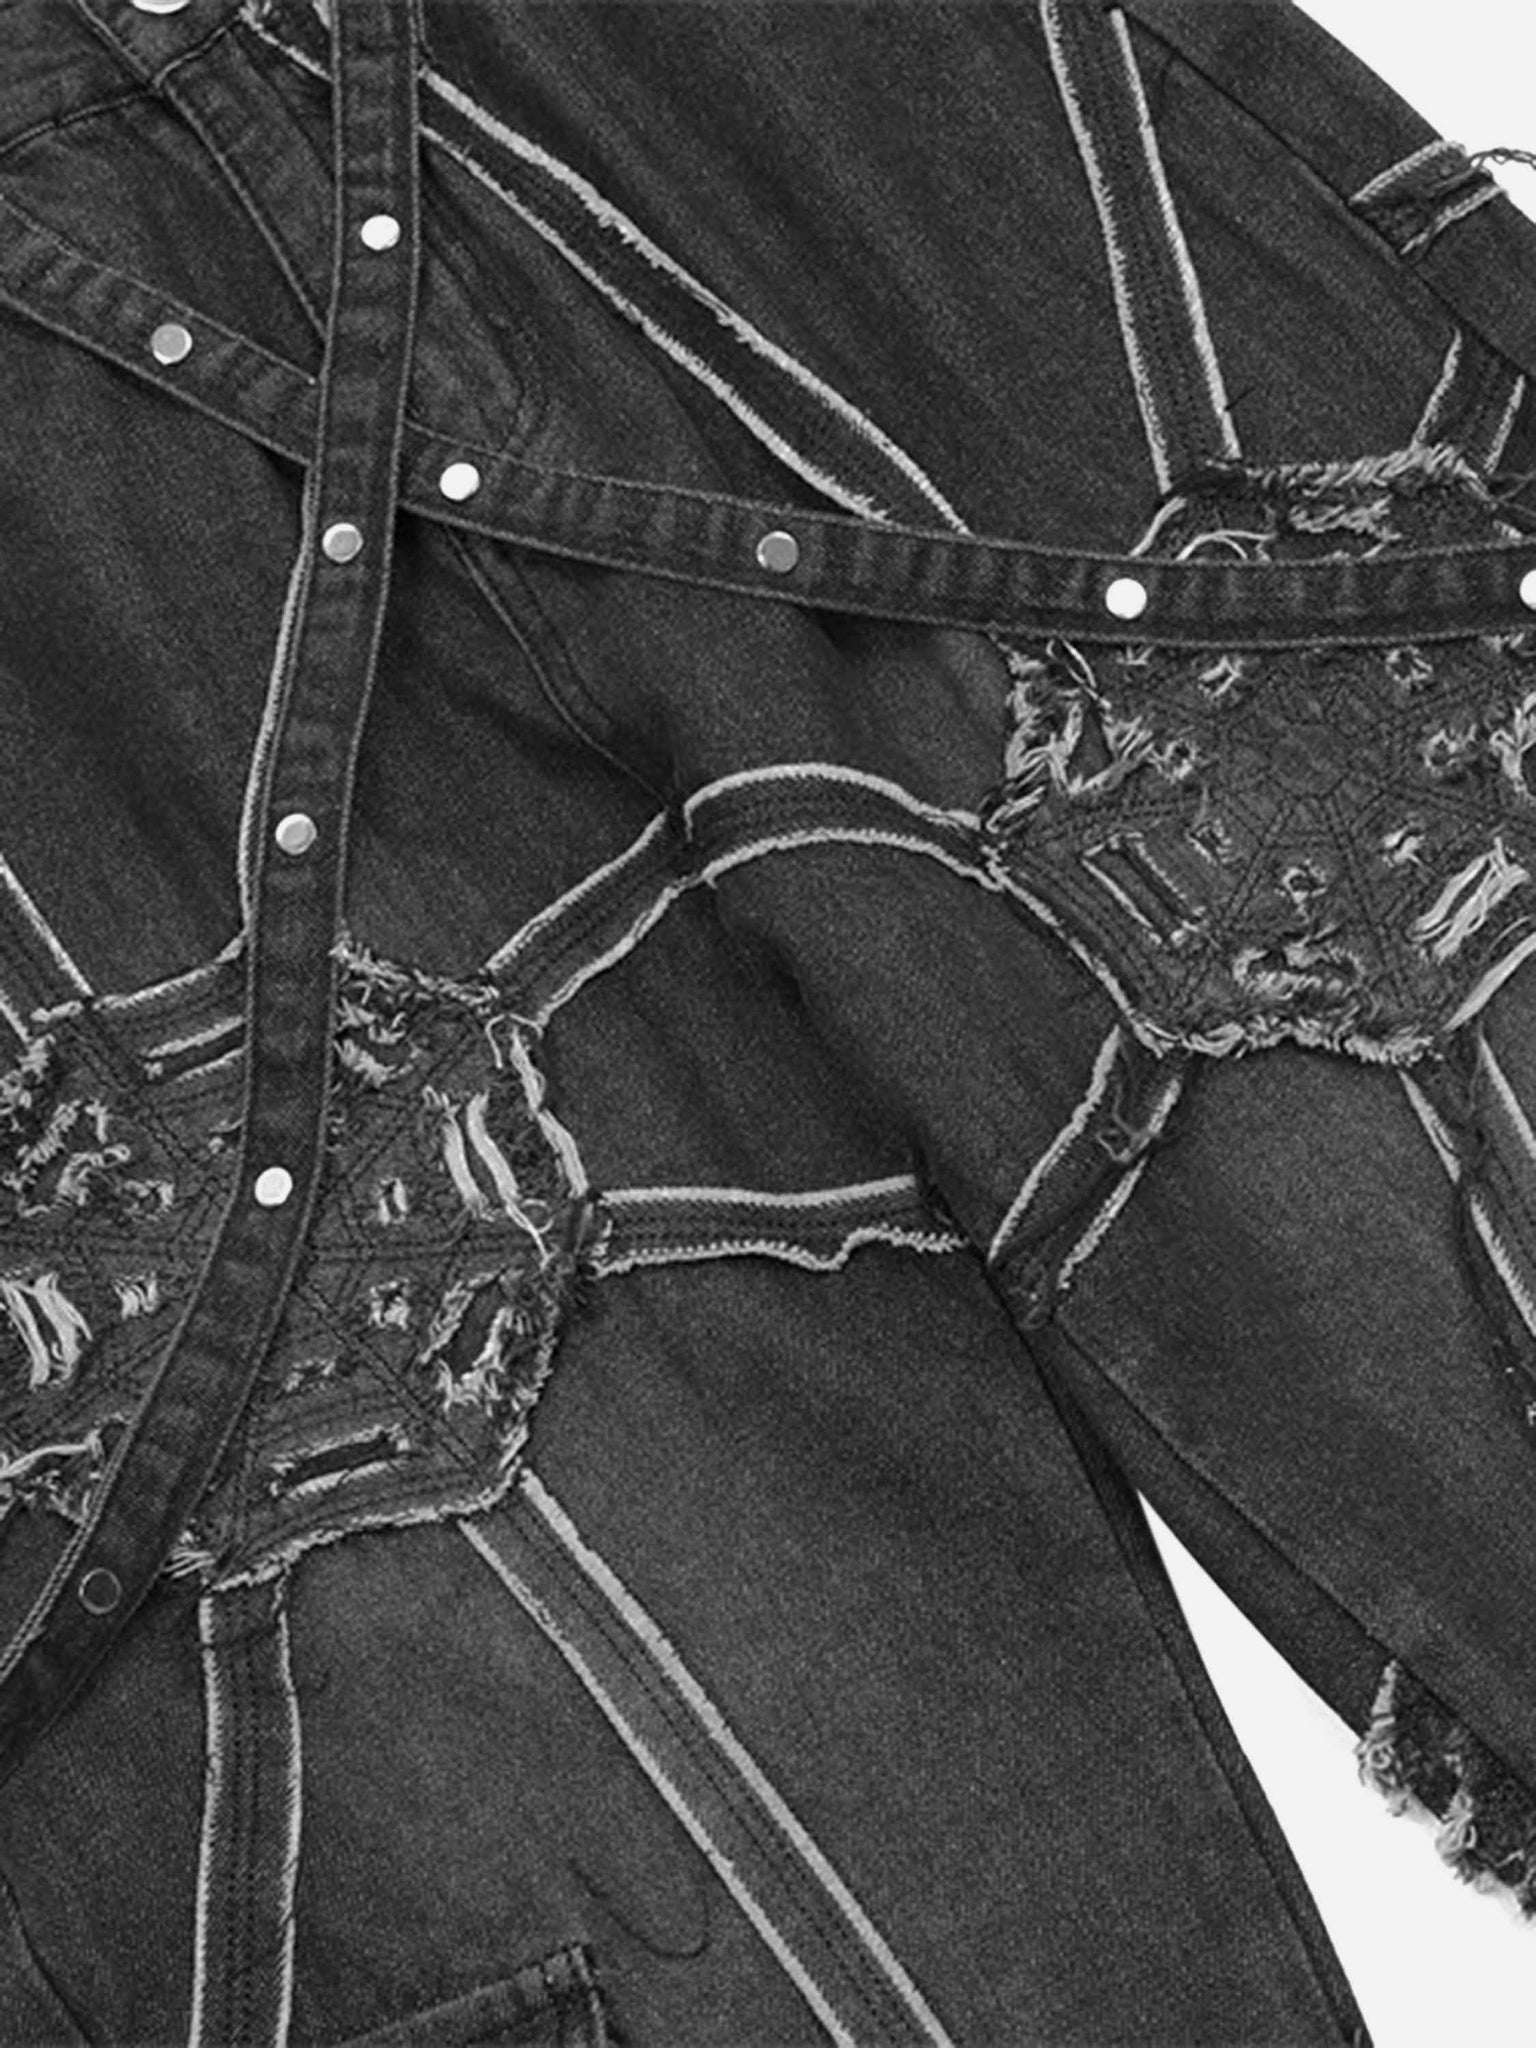 Thesupermade Hip-hop High Street Design Sense Spider Web Denim Straight Leg Pants-1512